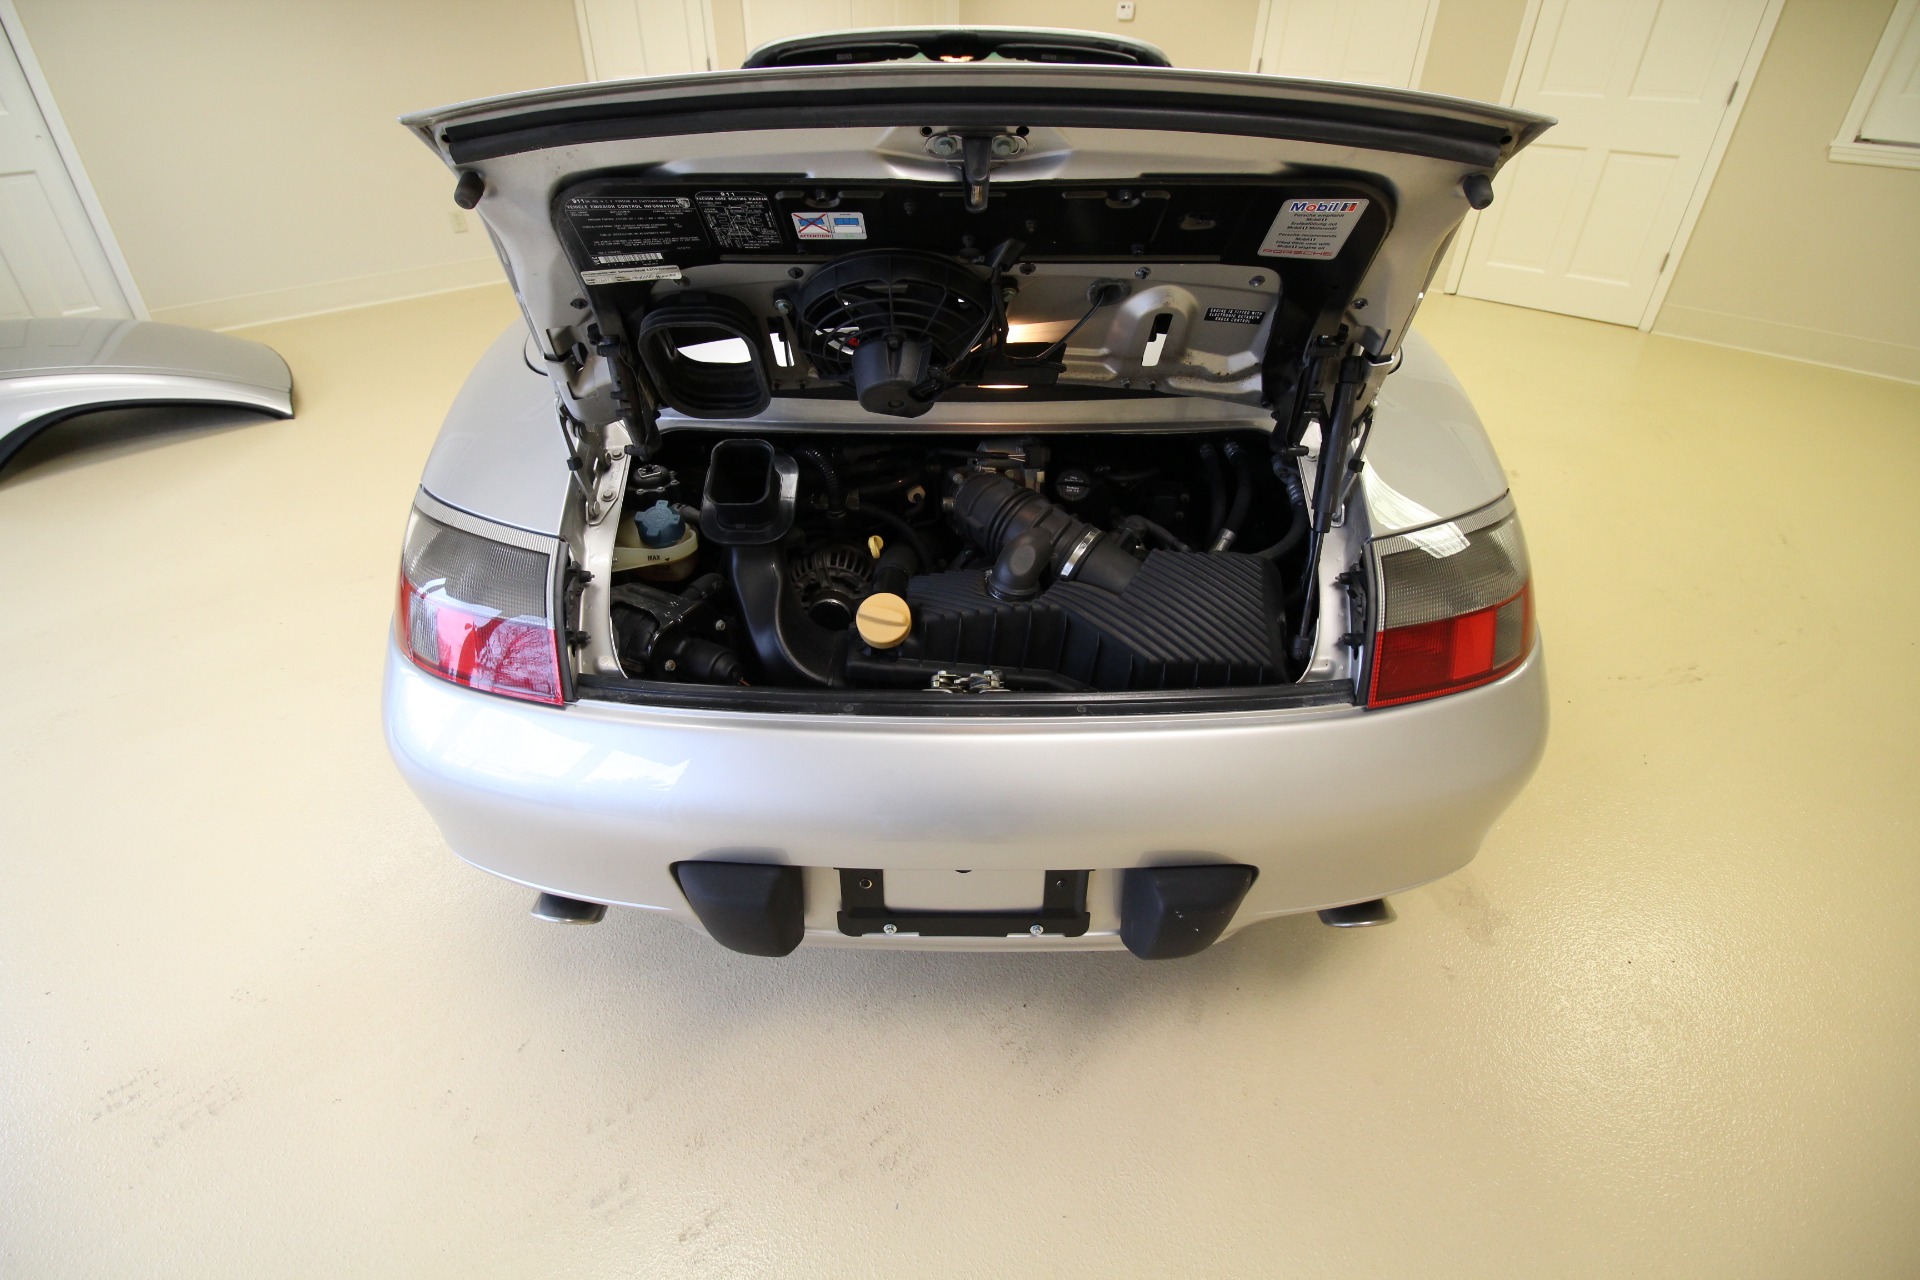 Used 2001 Arctic Silver Metallic with Black Top Porsche 911 Carrera 4 Cabriolet | Albany, NY